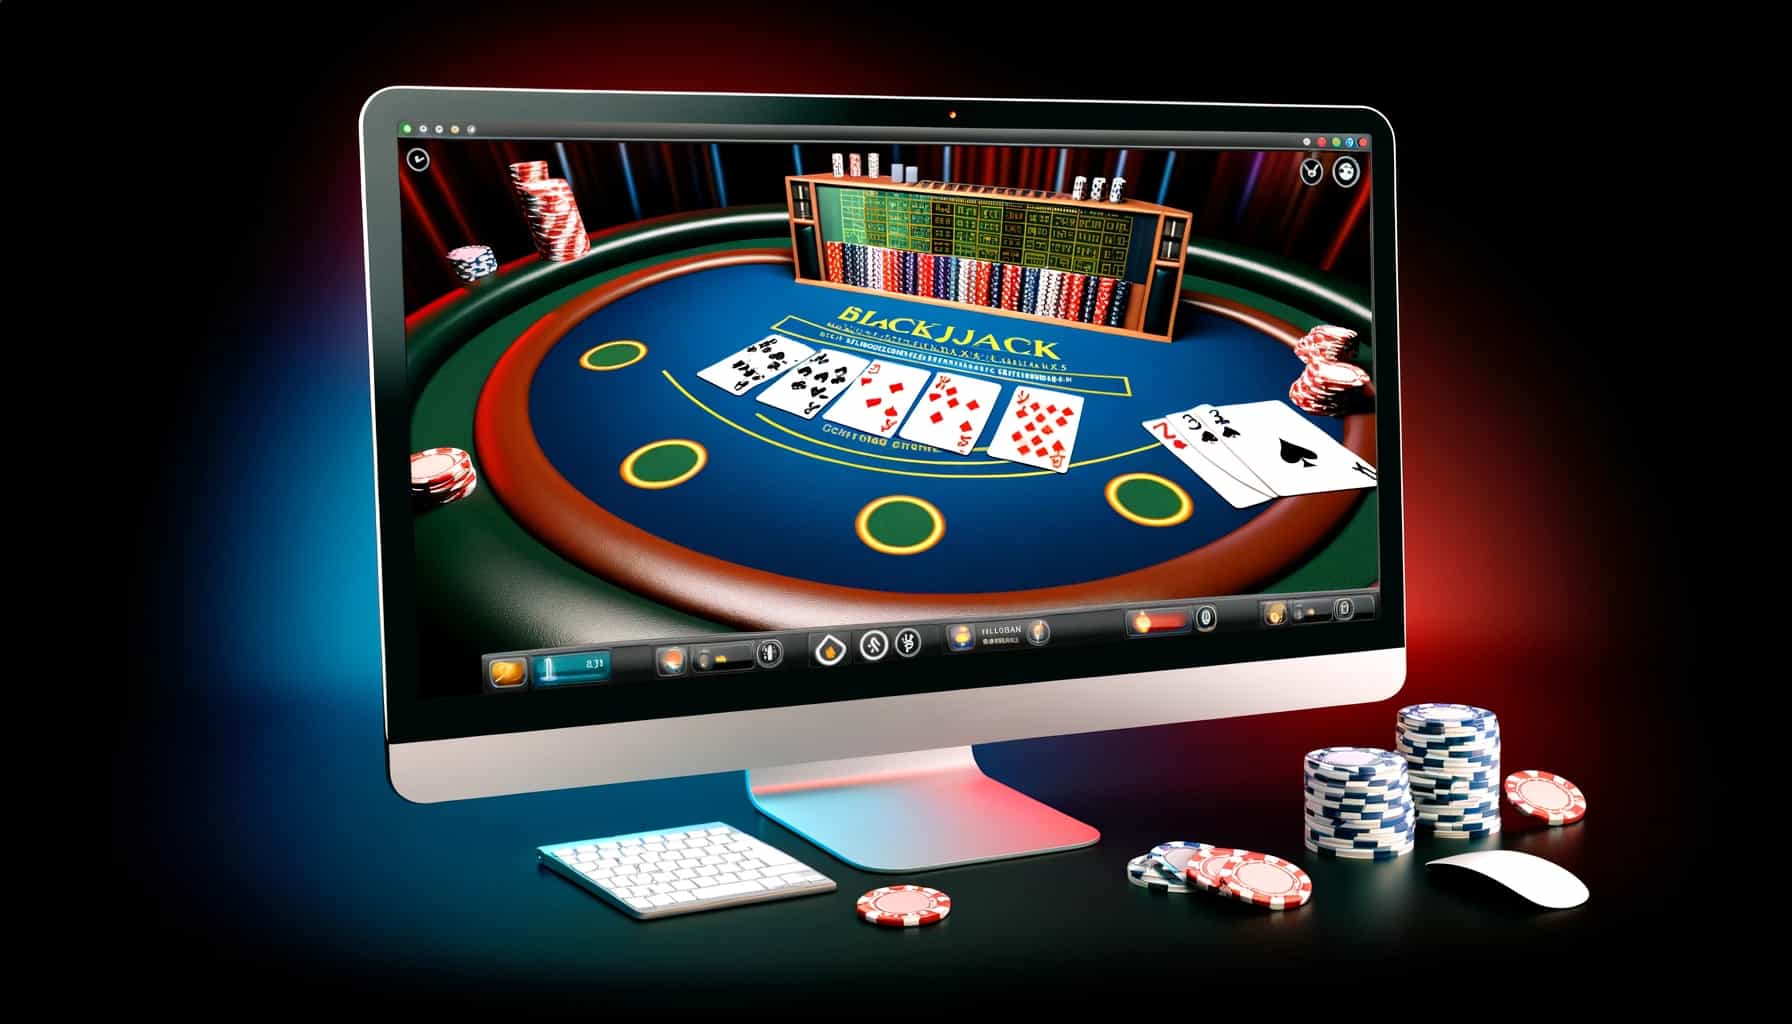 blackjack casino setup on screen